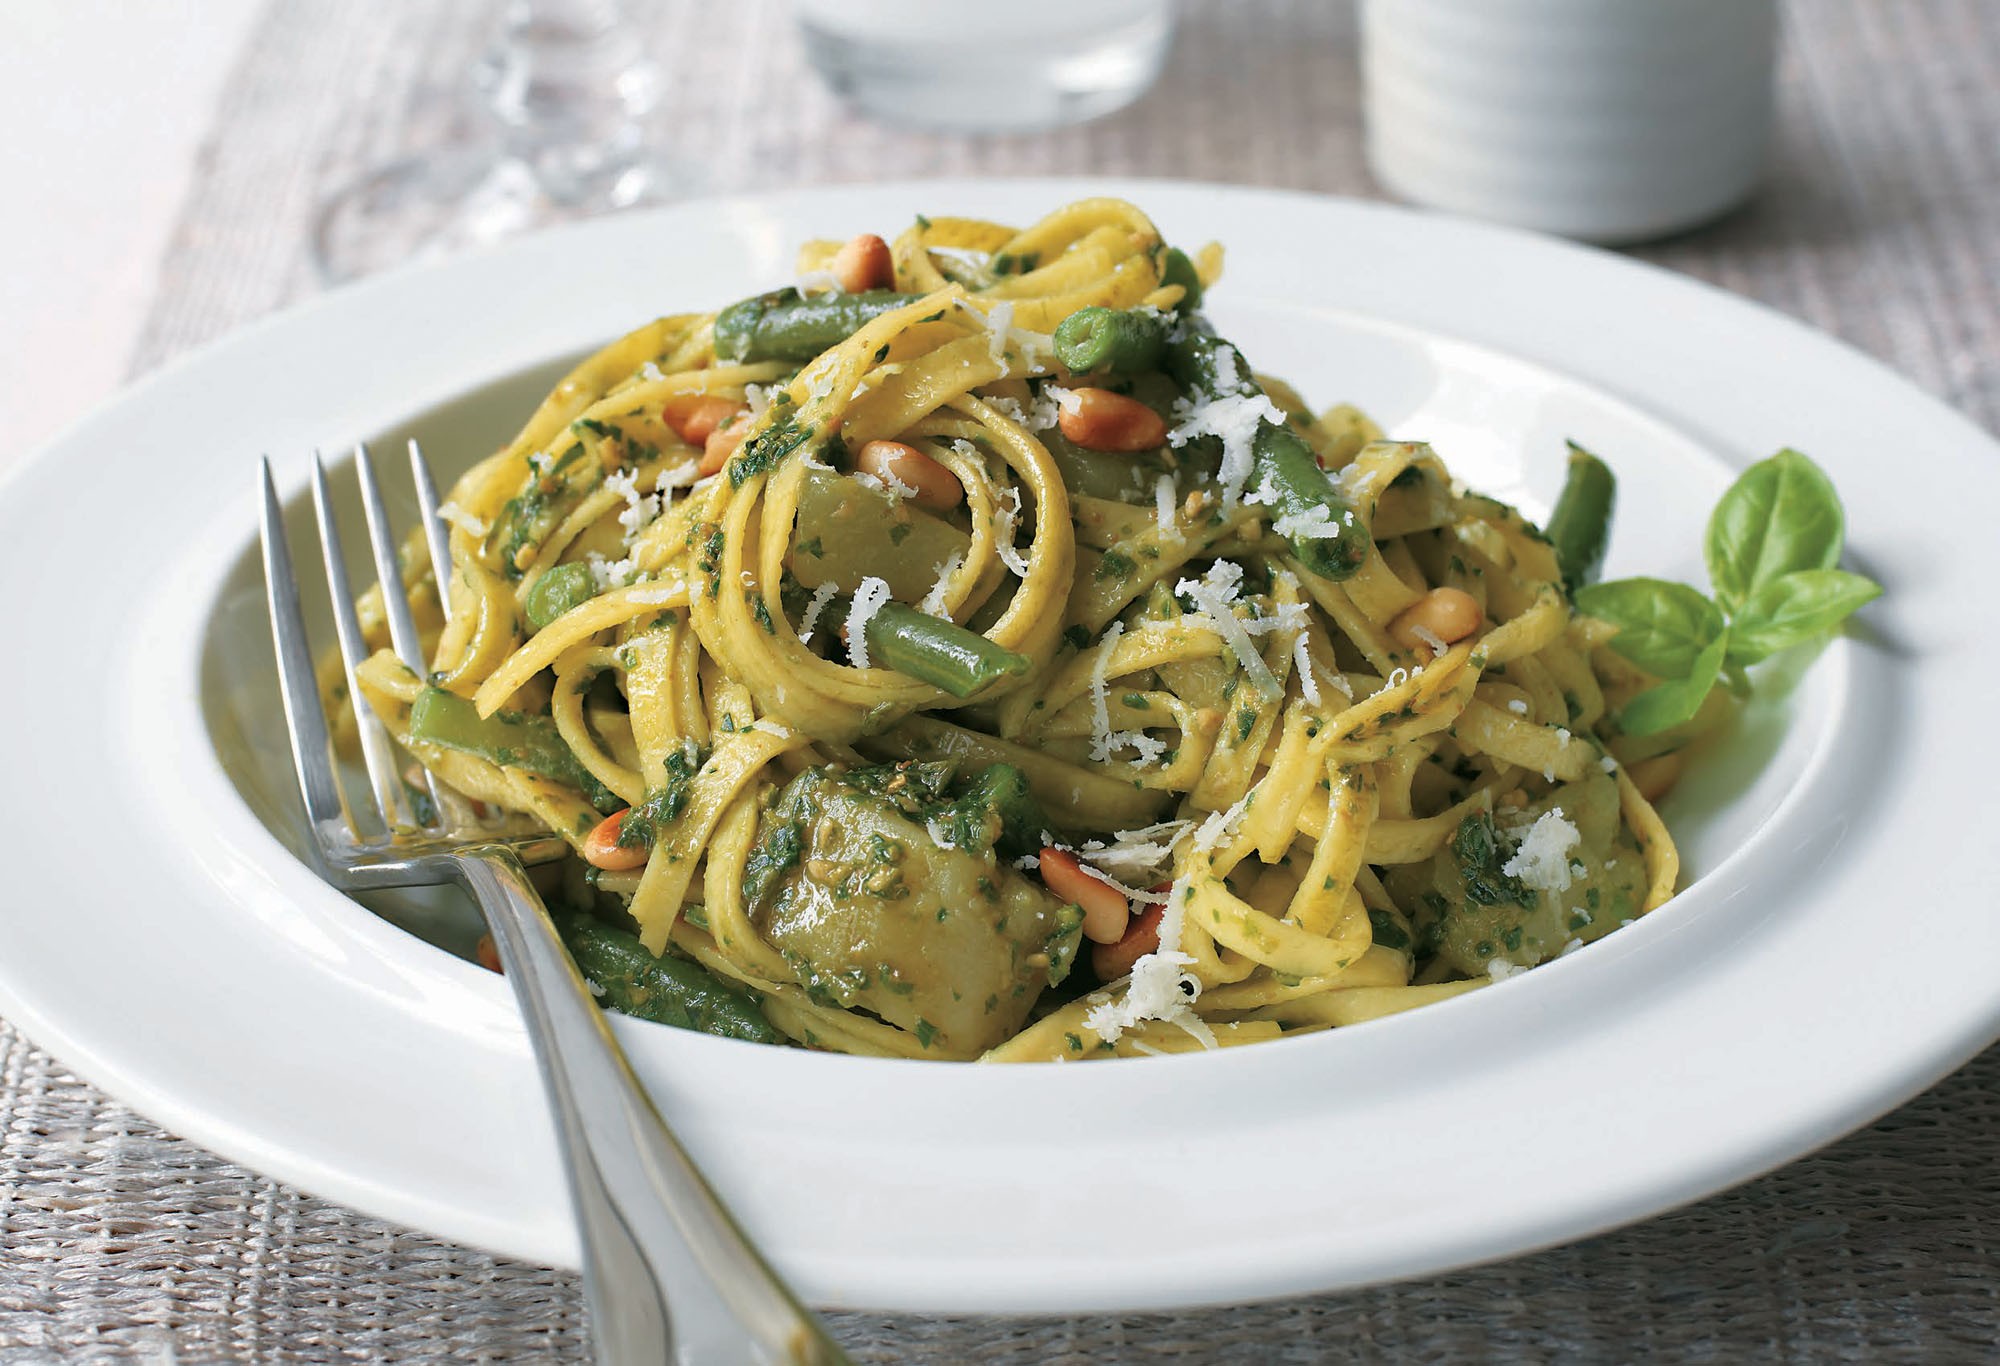 Trenette al Pesto alla Genovese from The Italian Regional Cookbook by ...